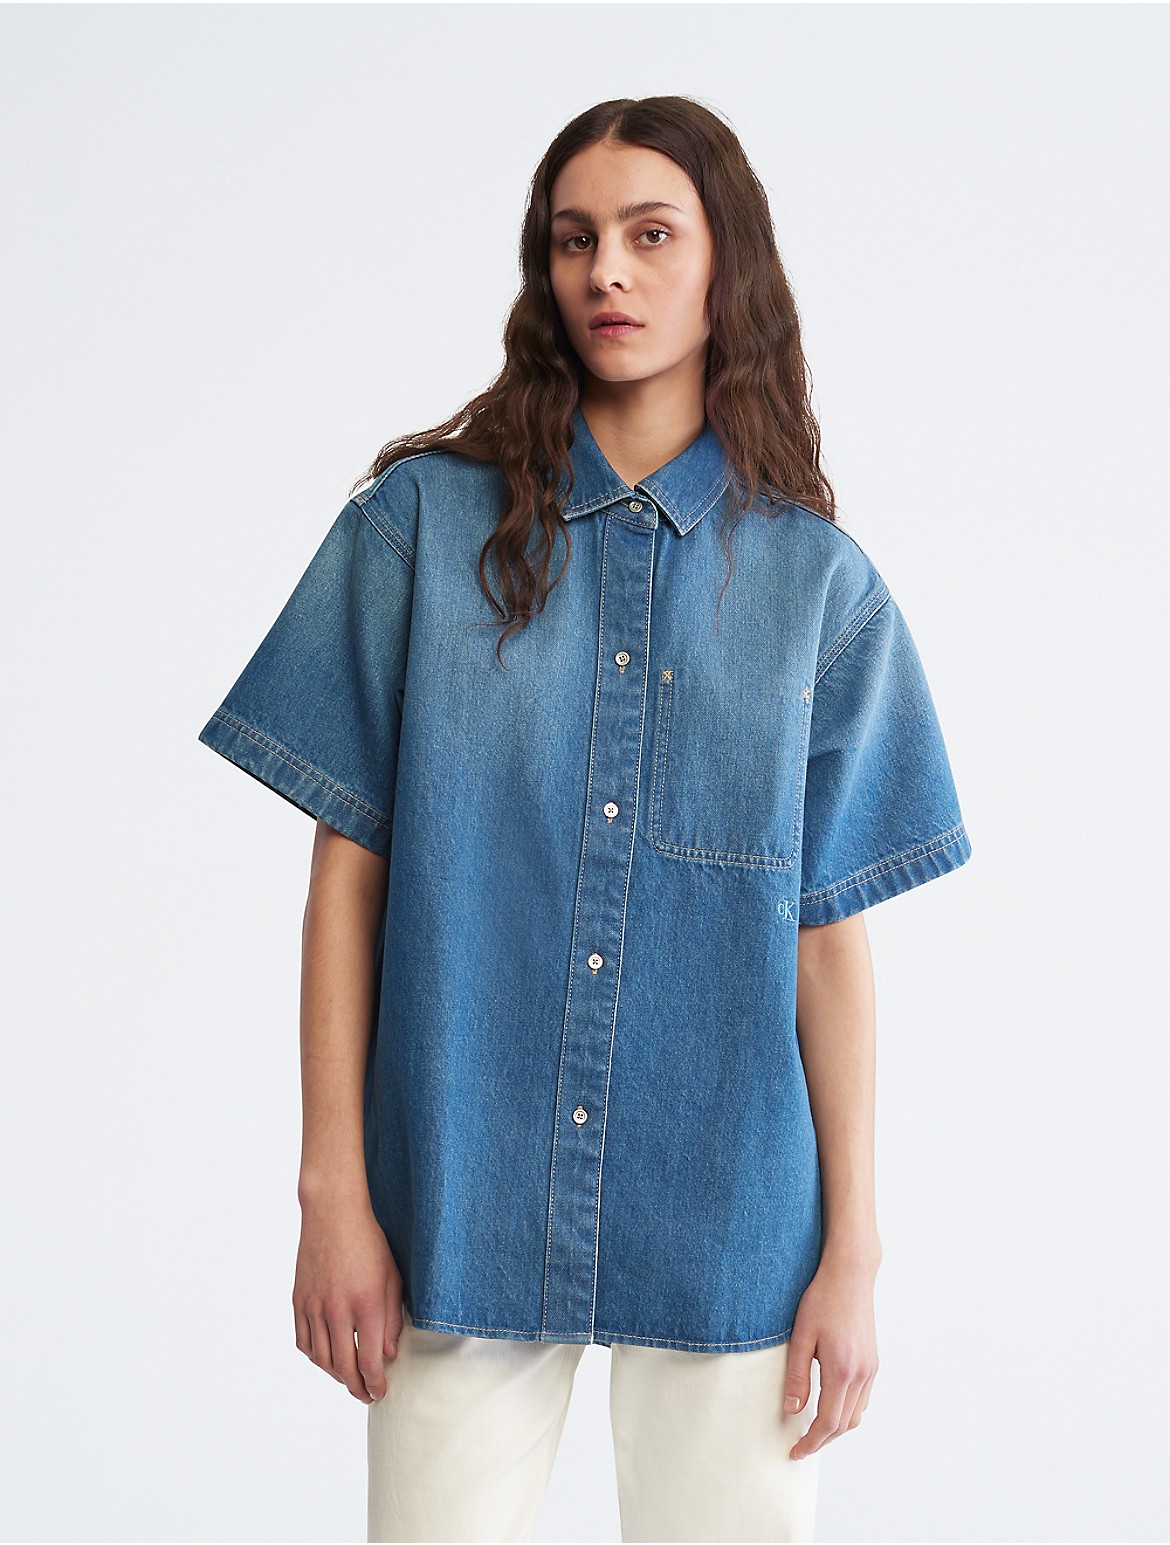 Calvin Klein Women's Sunbleached Relaxed Denim Button-Down Shirt - Blue - L